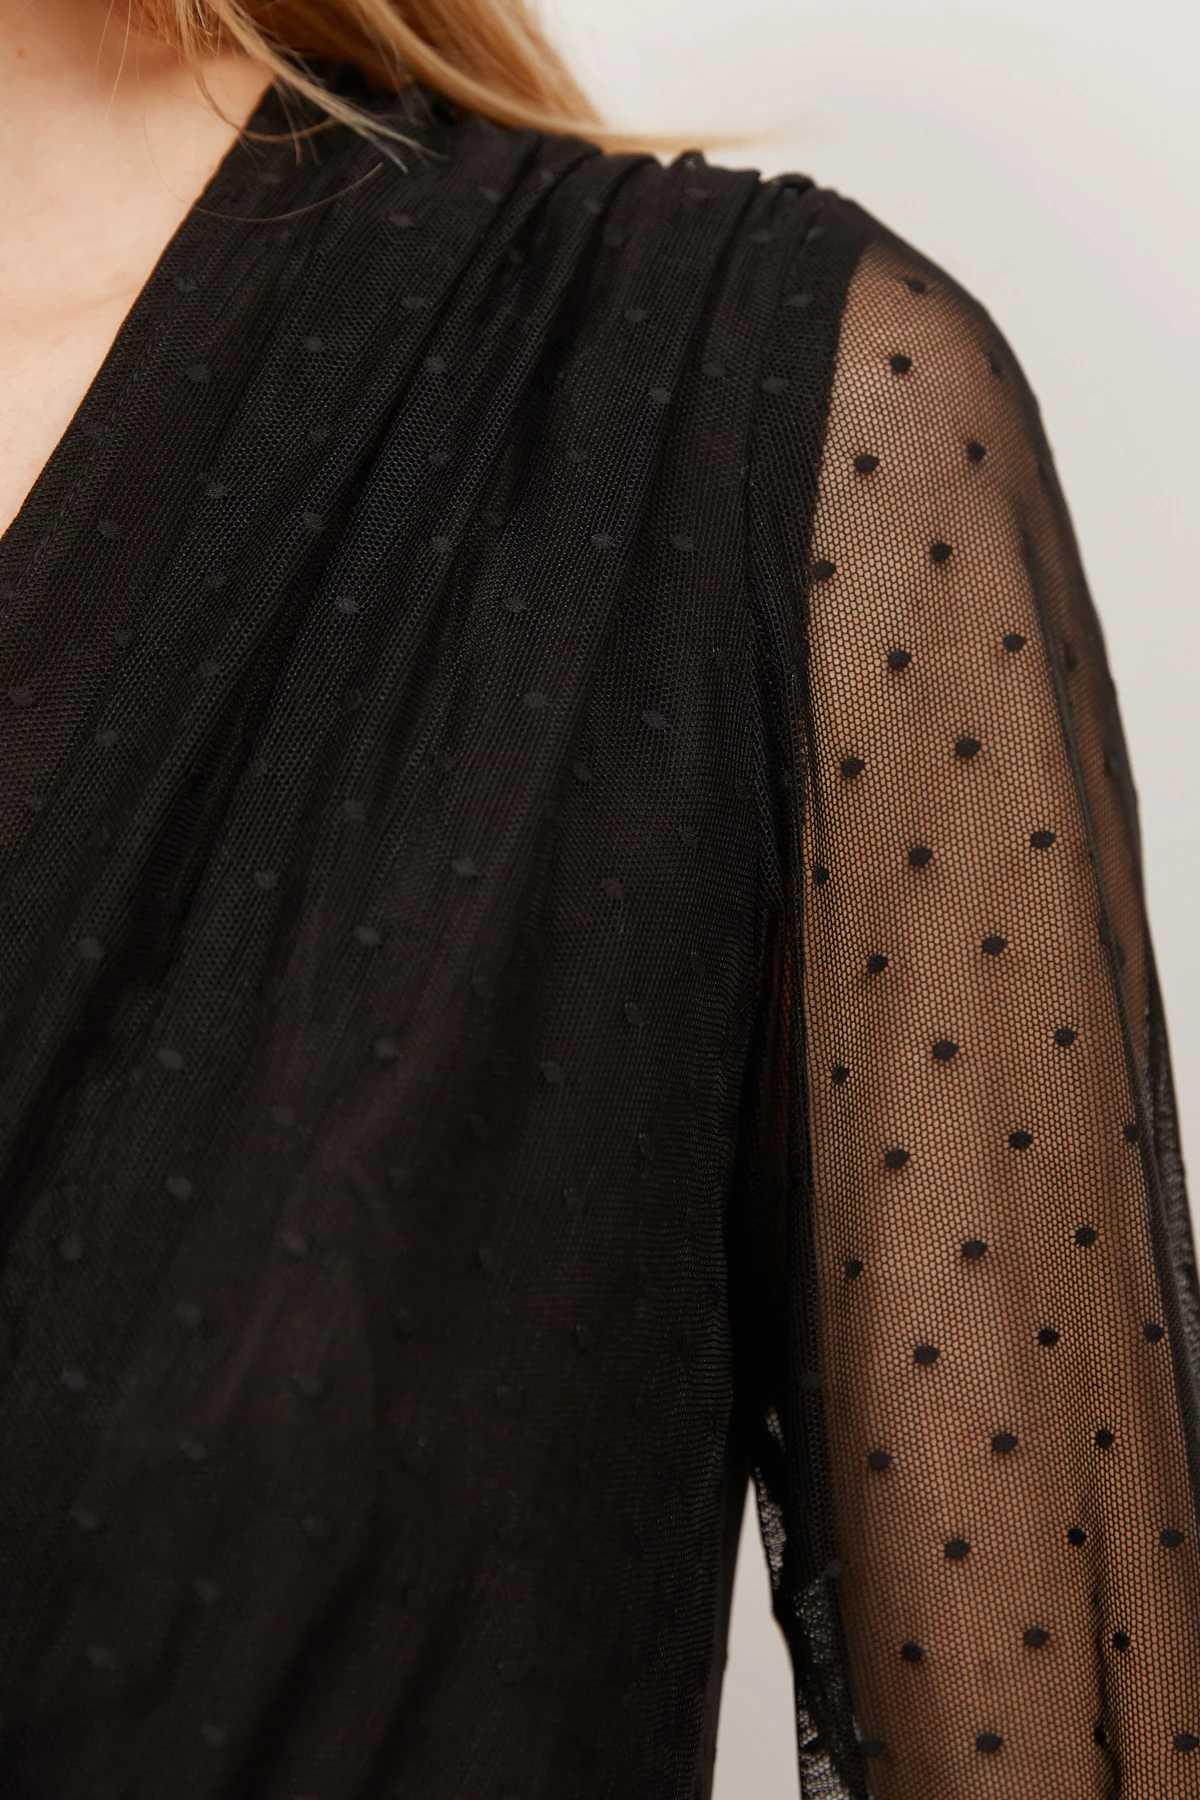 Black mesh short dress, photo 4